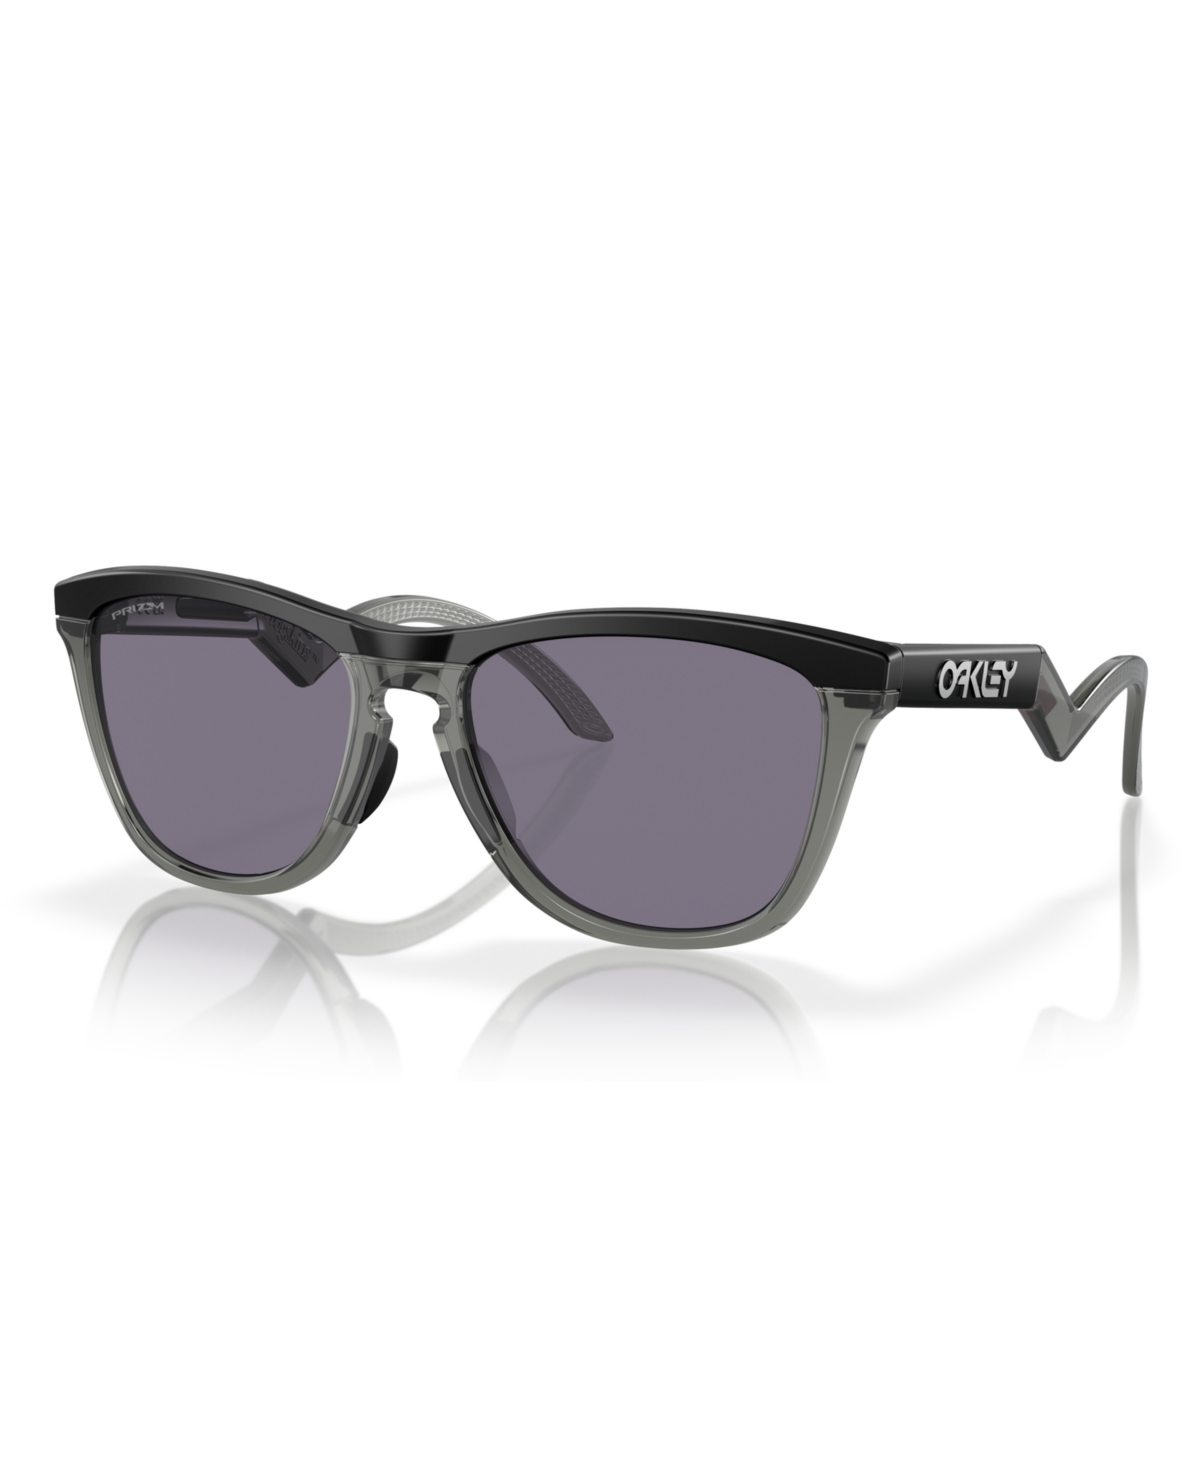 Men's Sunglasses, Frogskins Hybrid Oo9289 - Matte Black